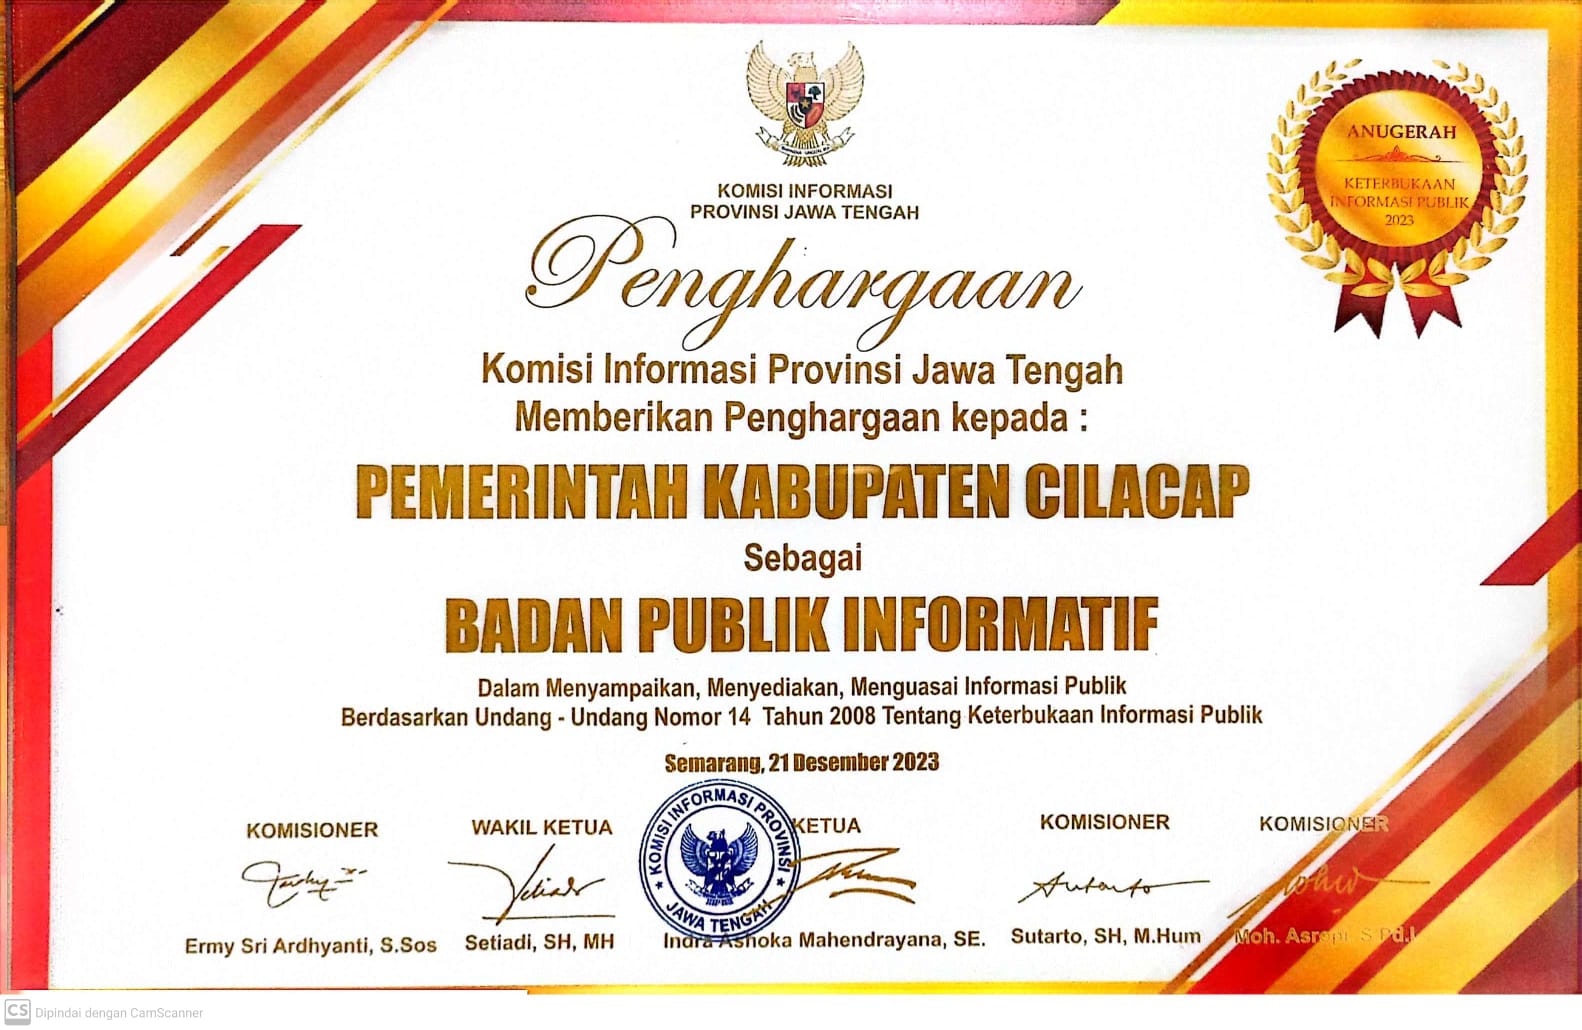 Penghargaan Kabupaten Informatif Cilacap